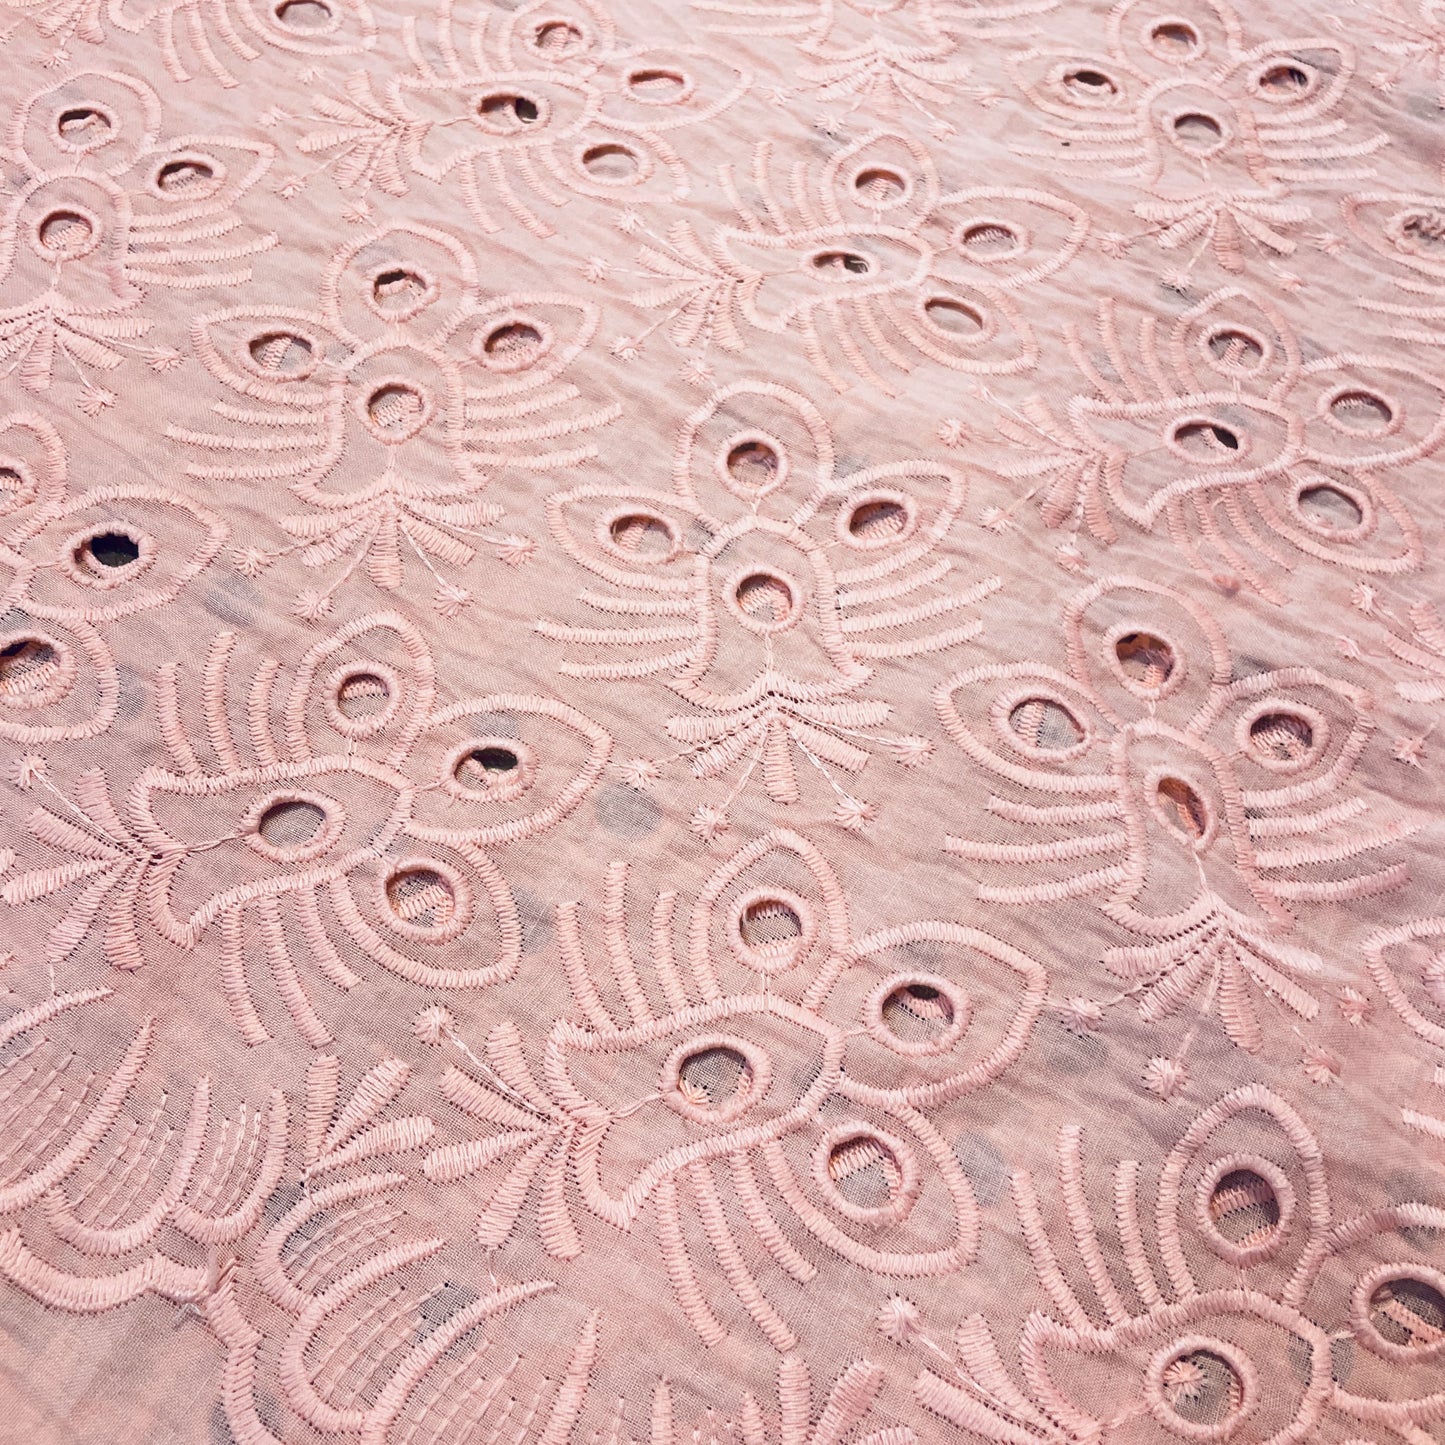 Premium Coral Pink Floral Embroidery Cotton Schiffli Fabric